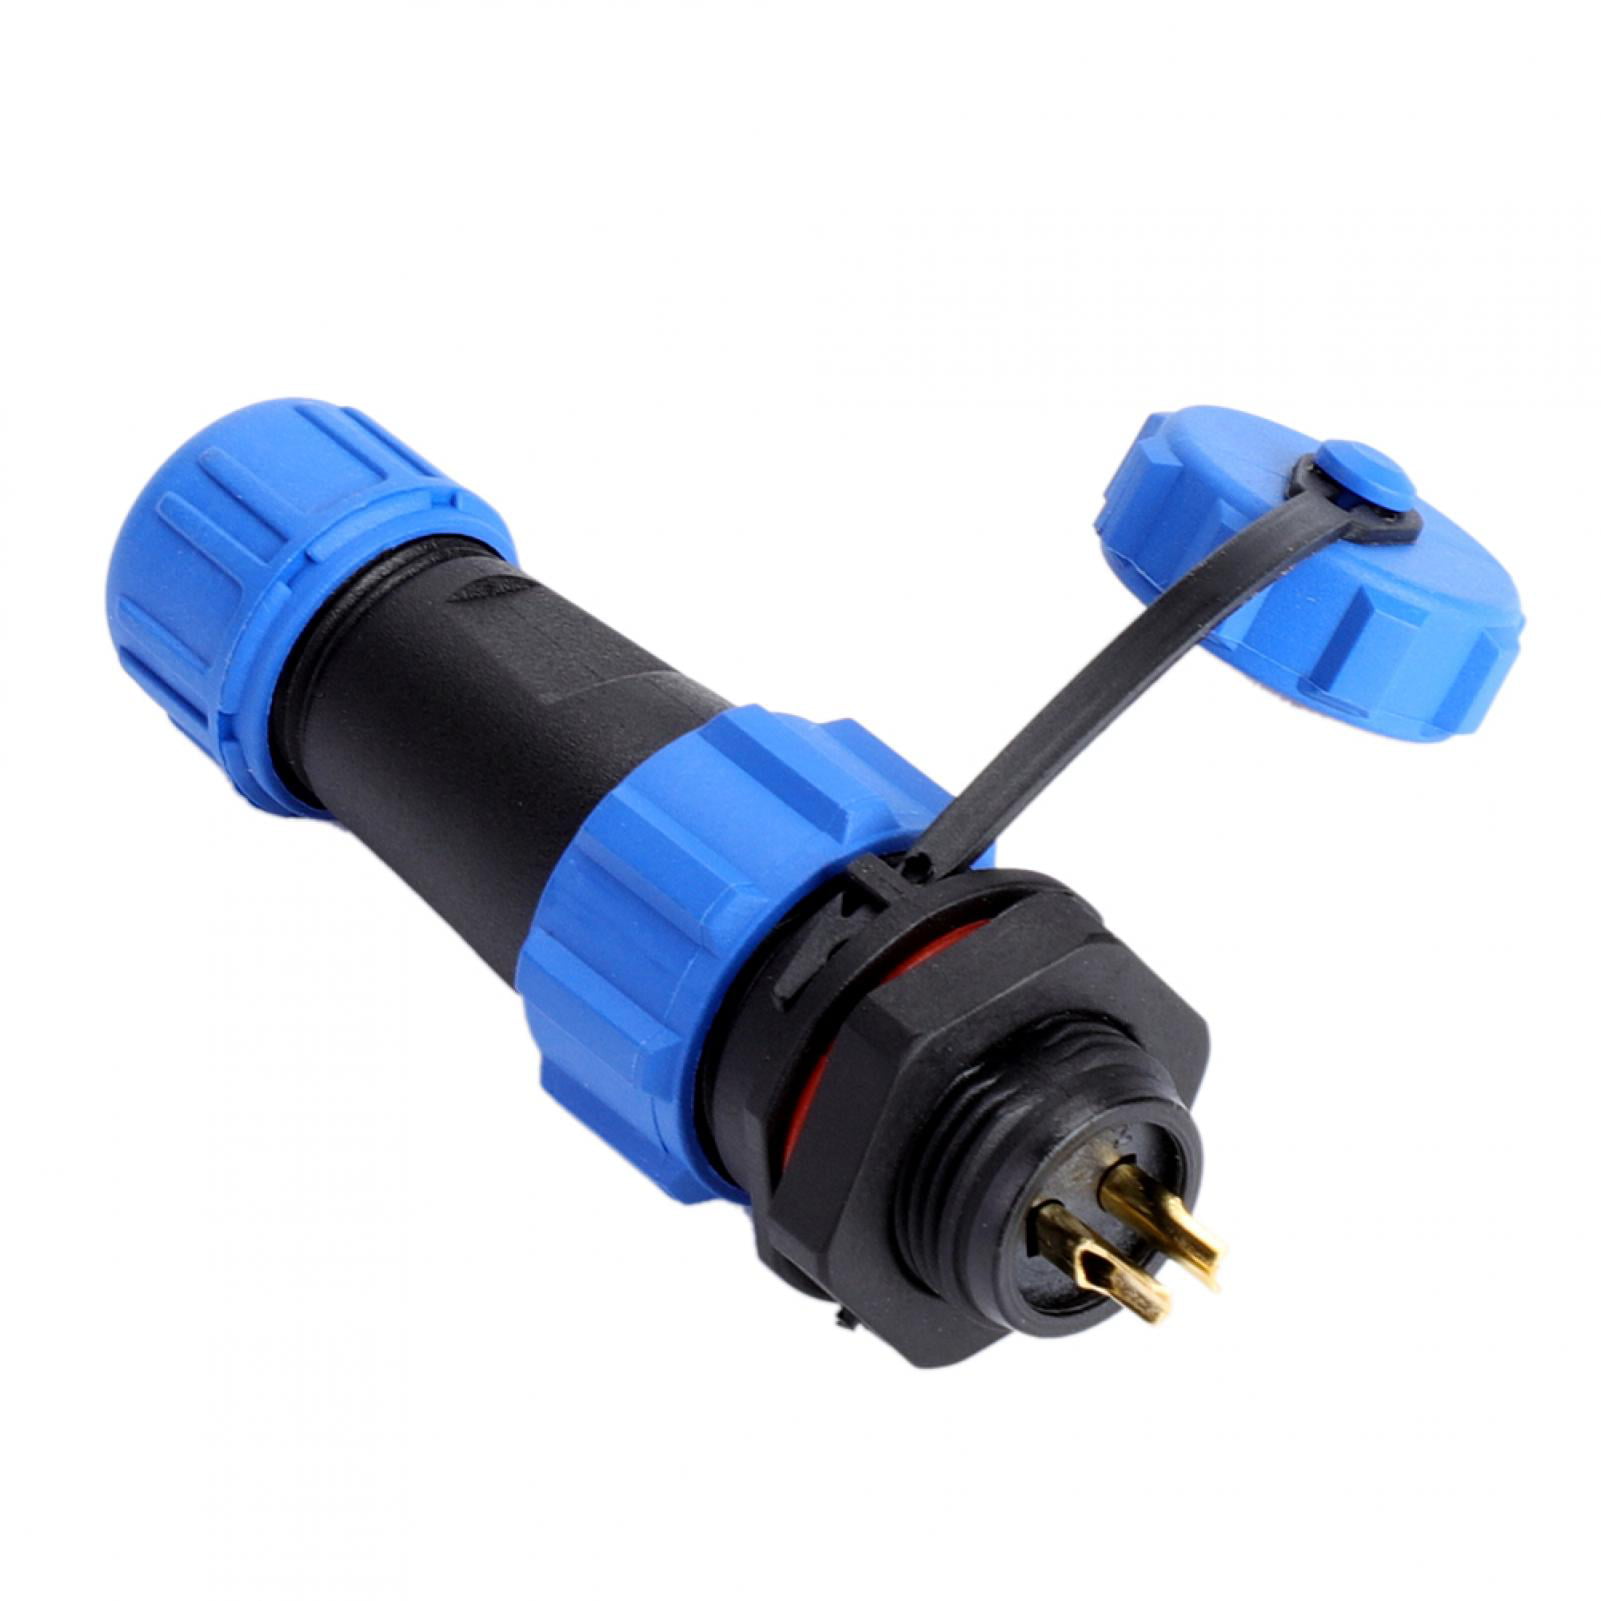 7pin Aviation Plug,IP68 SP13 2Pin/3Pin/4Pin/5Pin/6Pin/7Pin/9Pin Waterproof Aviation Plug Socket Connector,Waterproof Aviation Plug